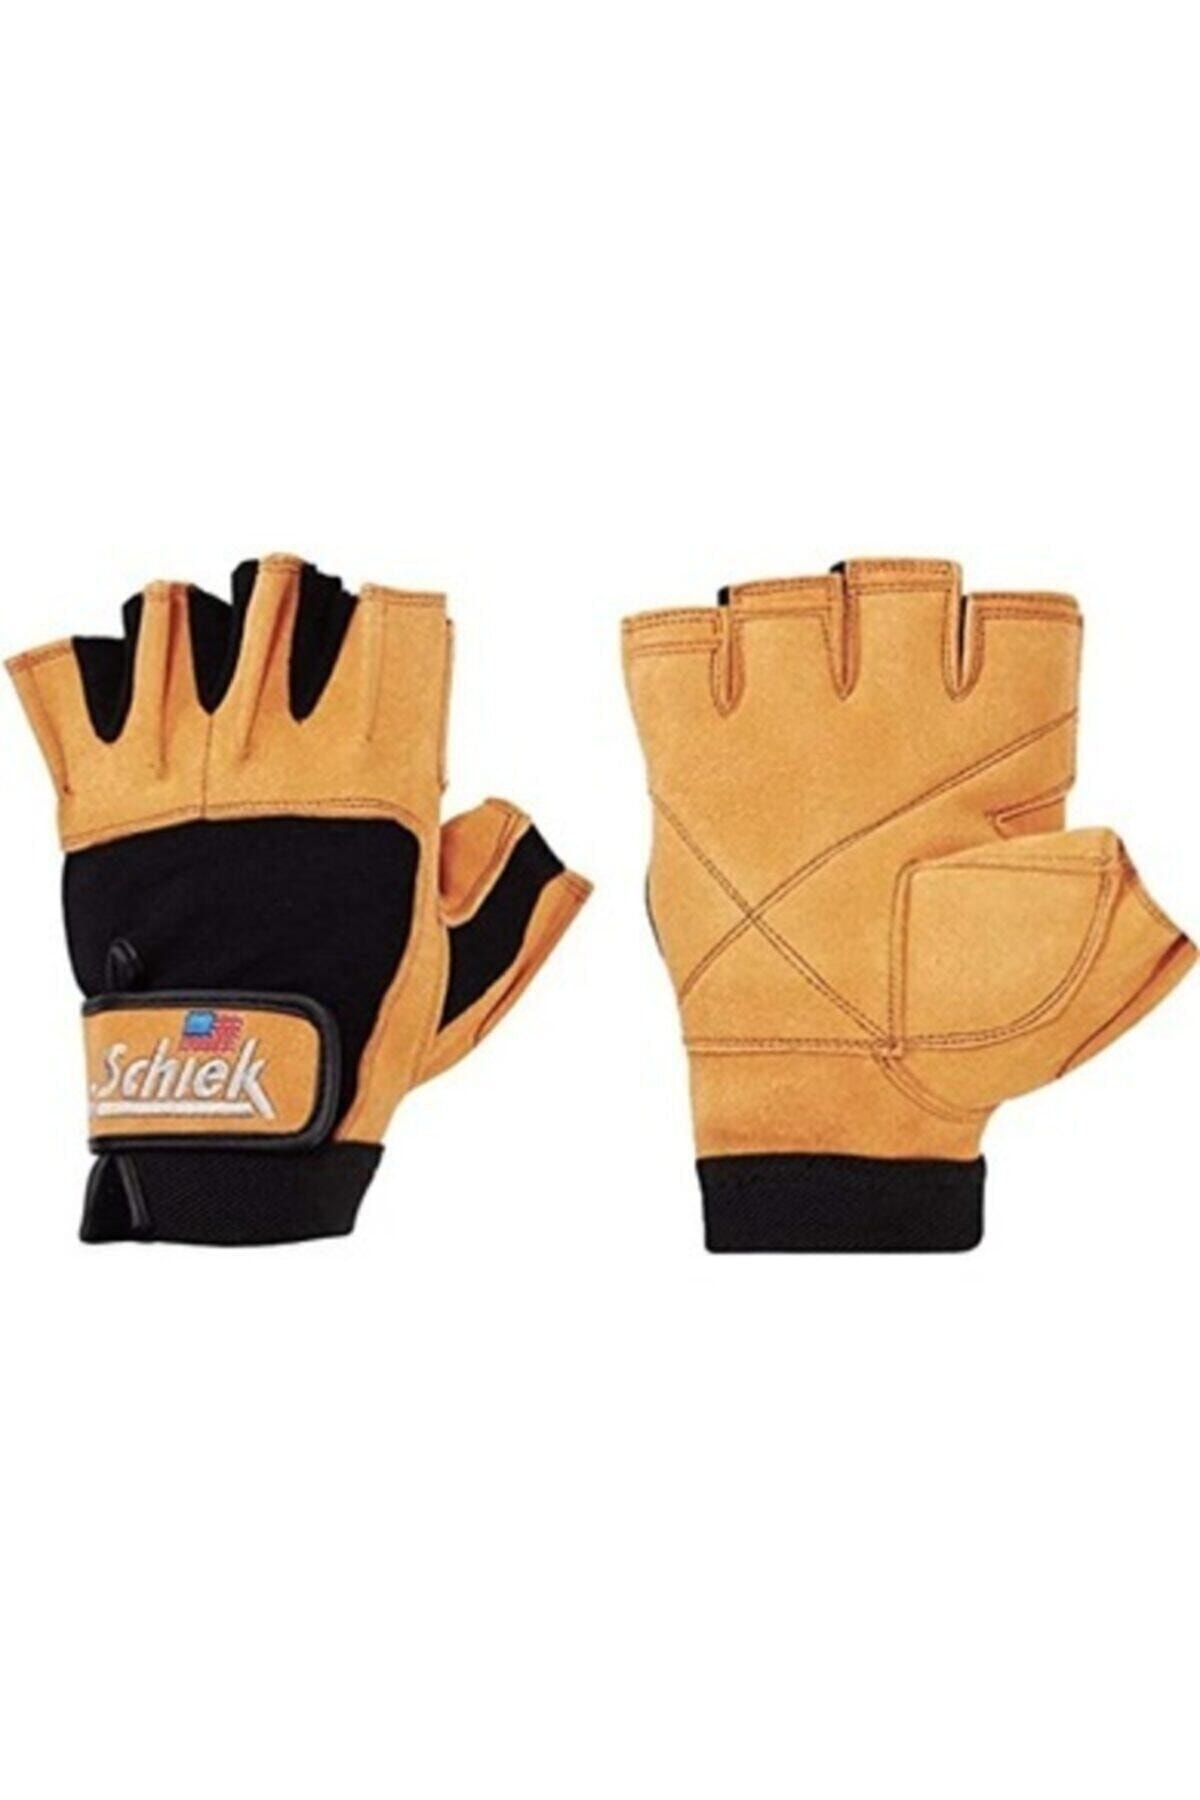 3M Schiek Lifting Gloves Ağırlık Fitness Eldiveni Jay Cutler Chris Cormier